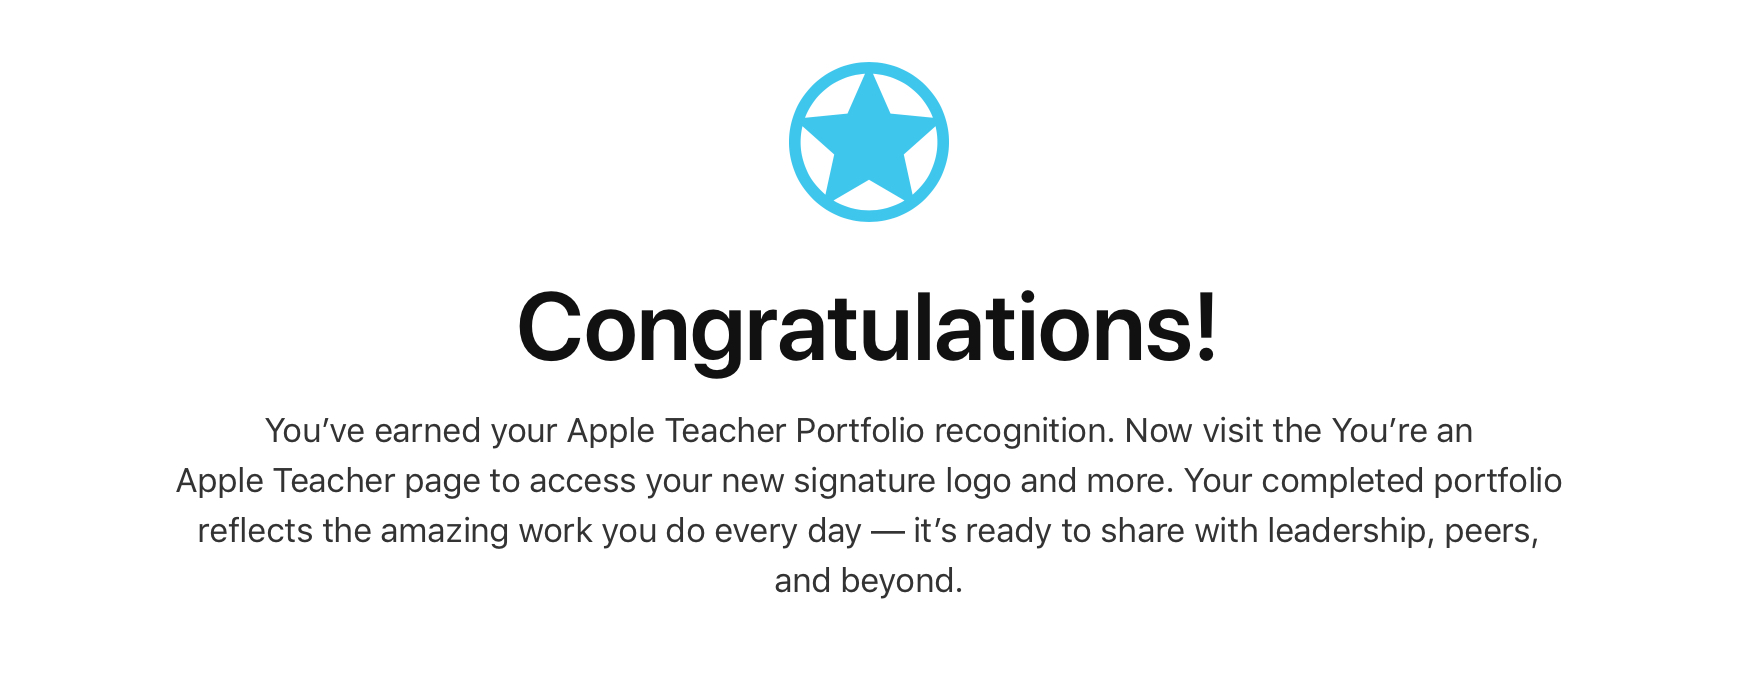 Congratulations! You've earned your Apple Teacher Portfolio recognition.